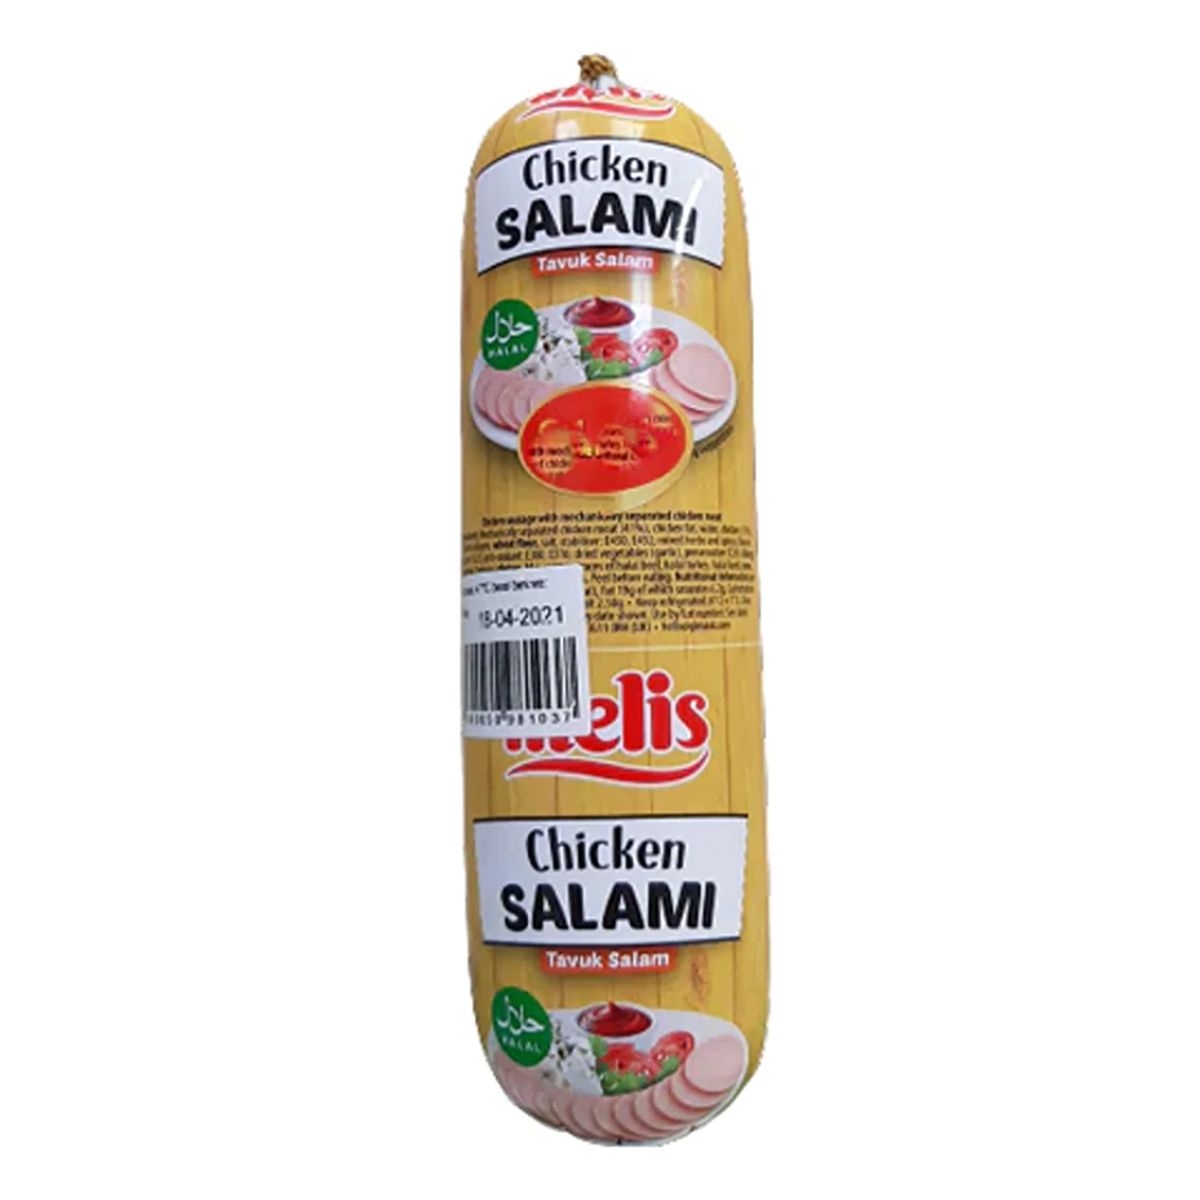 Packaged Melis - Chicken Salami (Halal) - 500g.